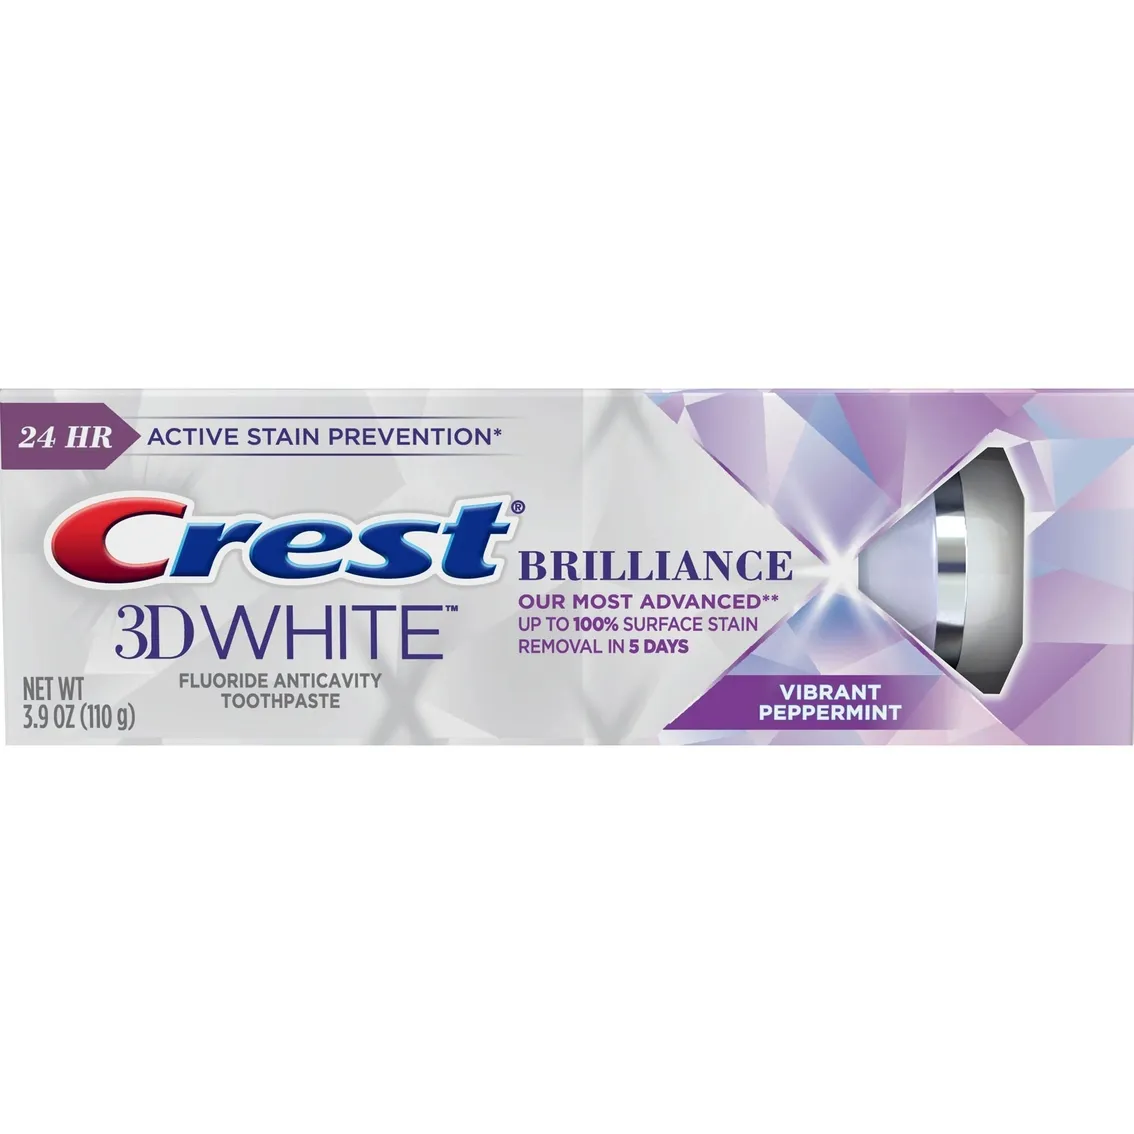 Mejor precio Crest 3D White Brilliance Pasta de dientes Blanqueamiento Dental Brilliance Vibrant Peppermint Crest Pasta de dientes